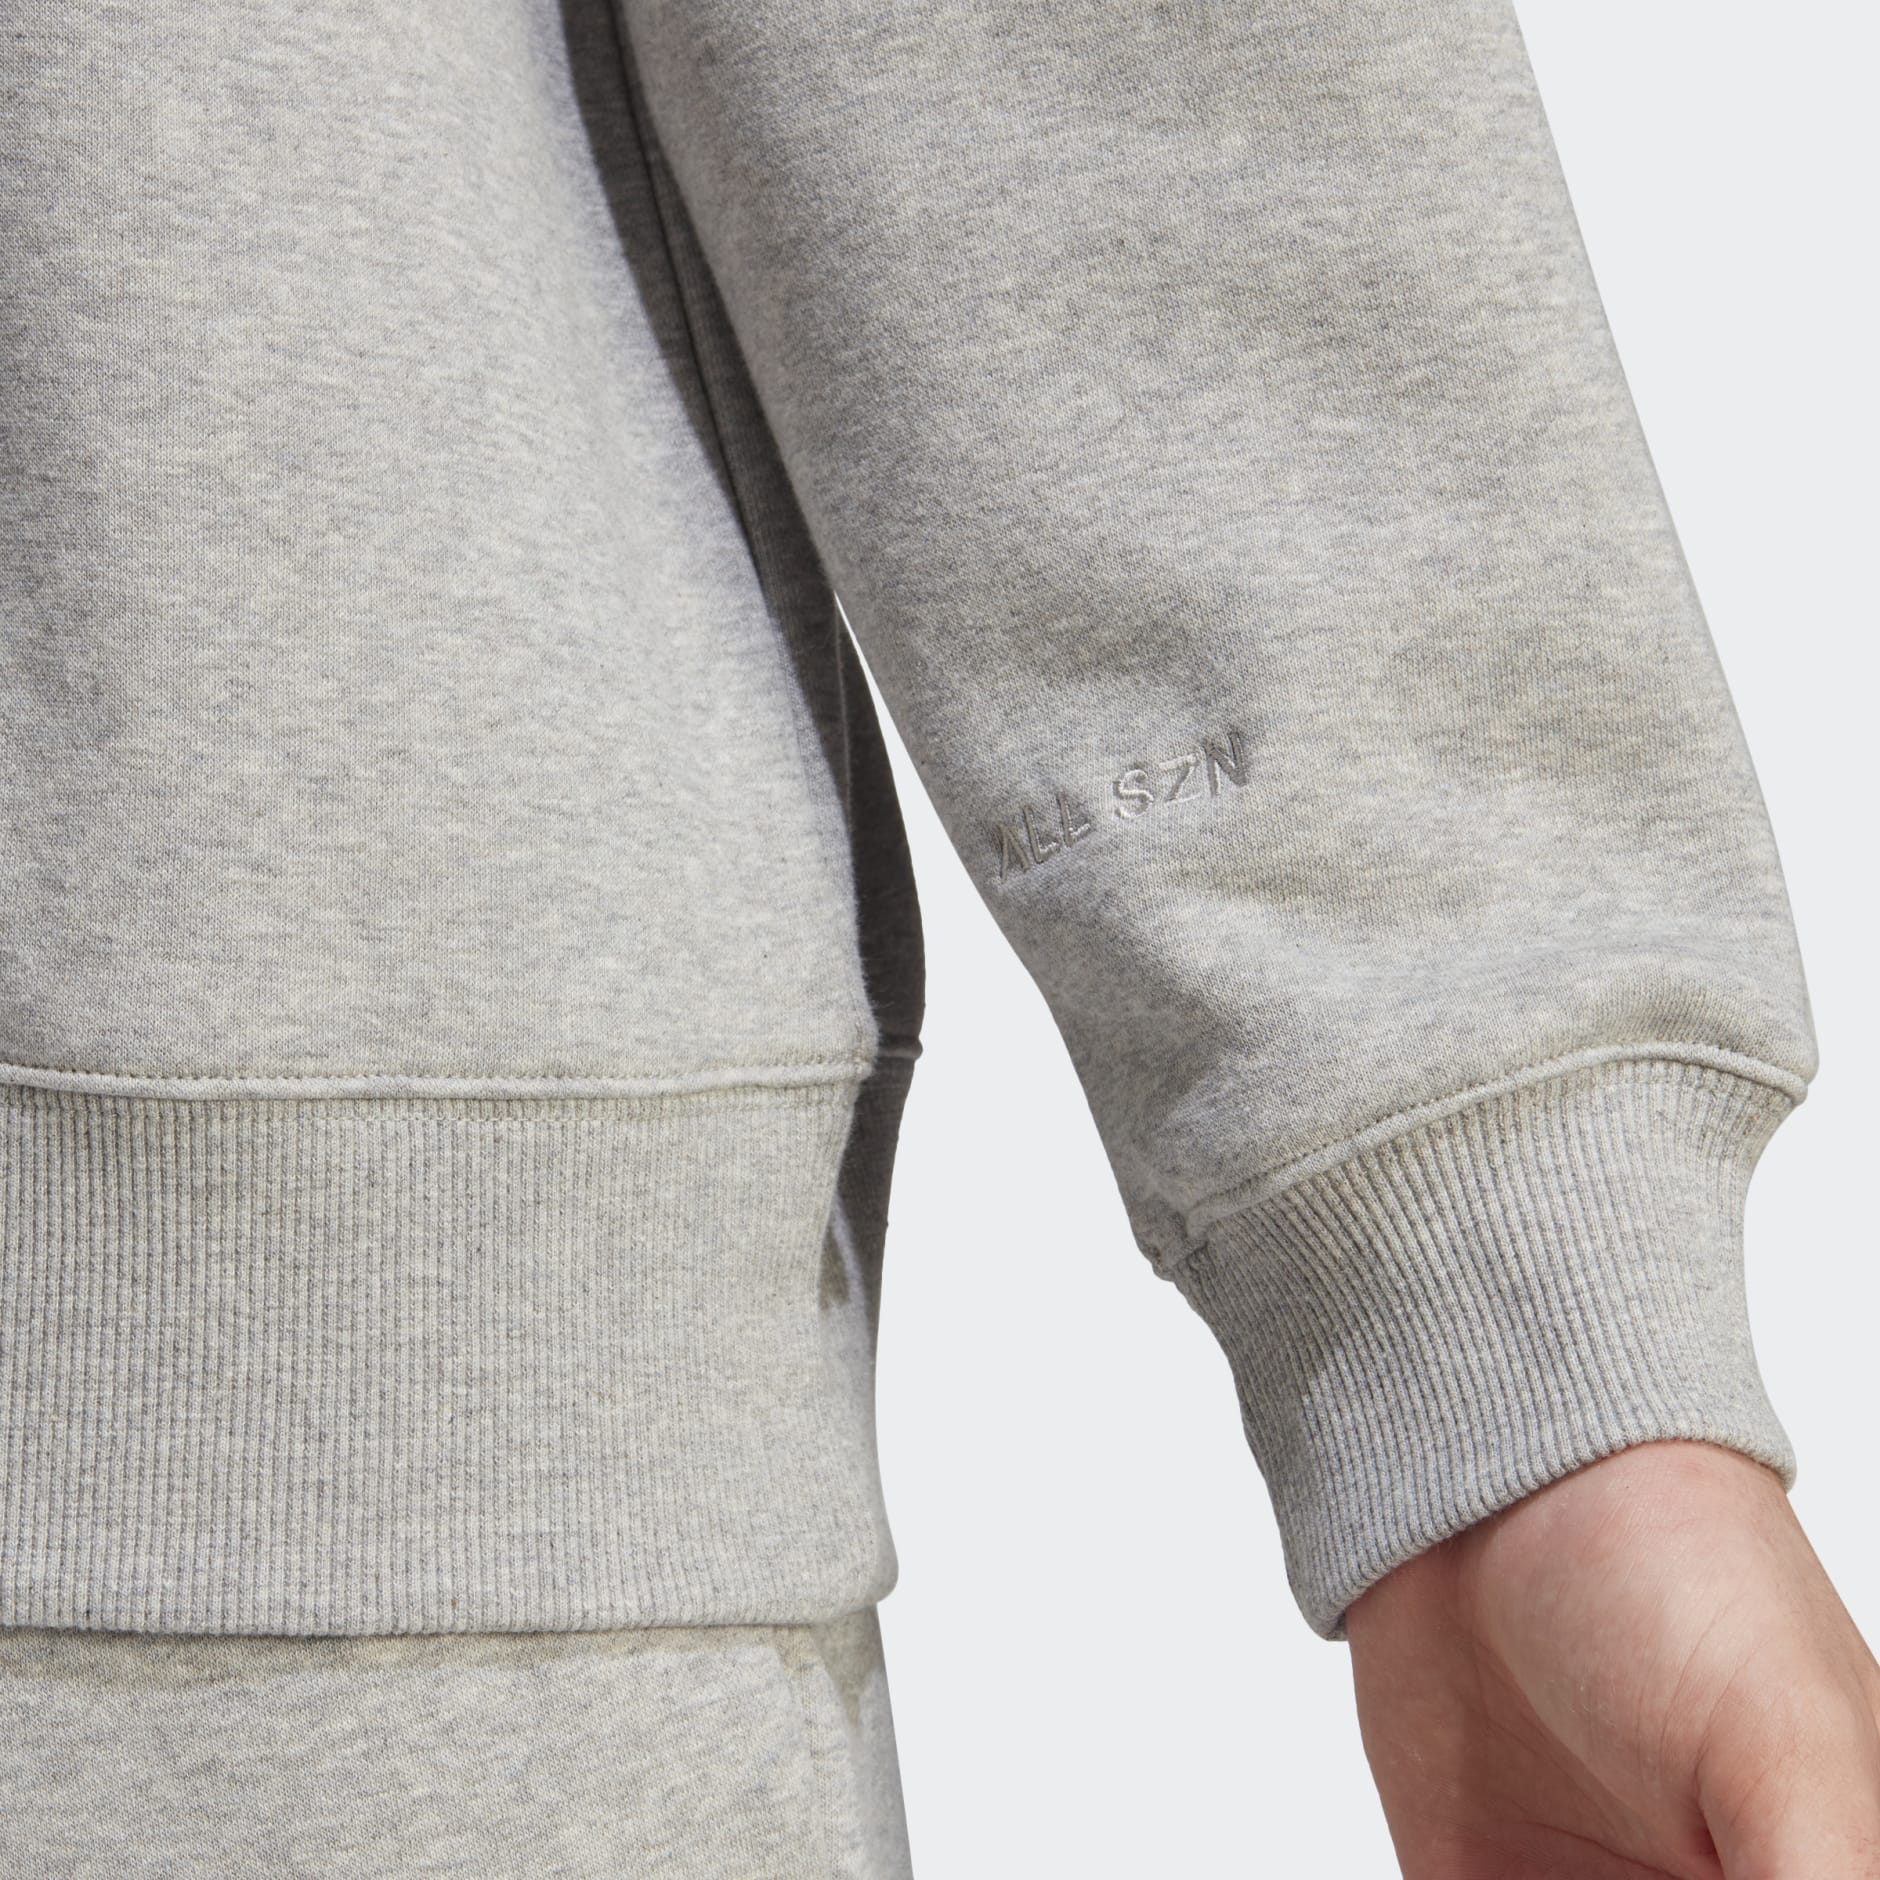 SZN Fleece South - adidas | Africa Graphic All Grey - Clothing Sweatshirt